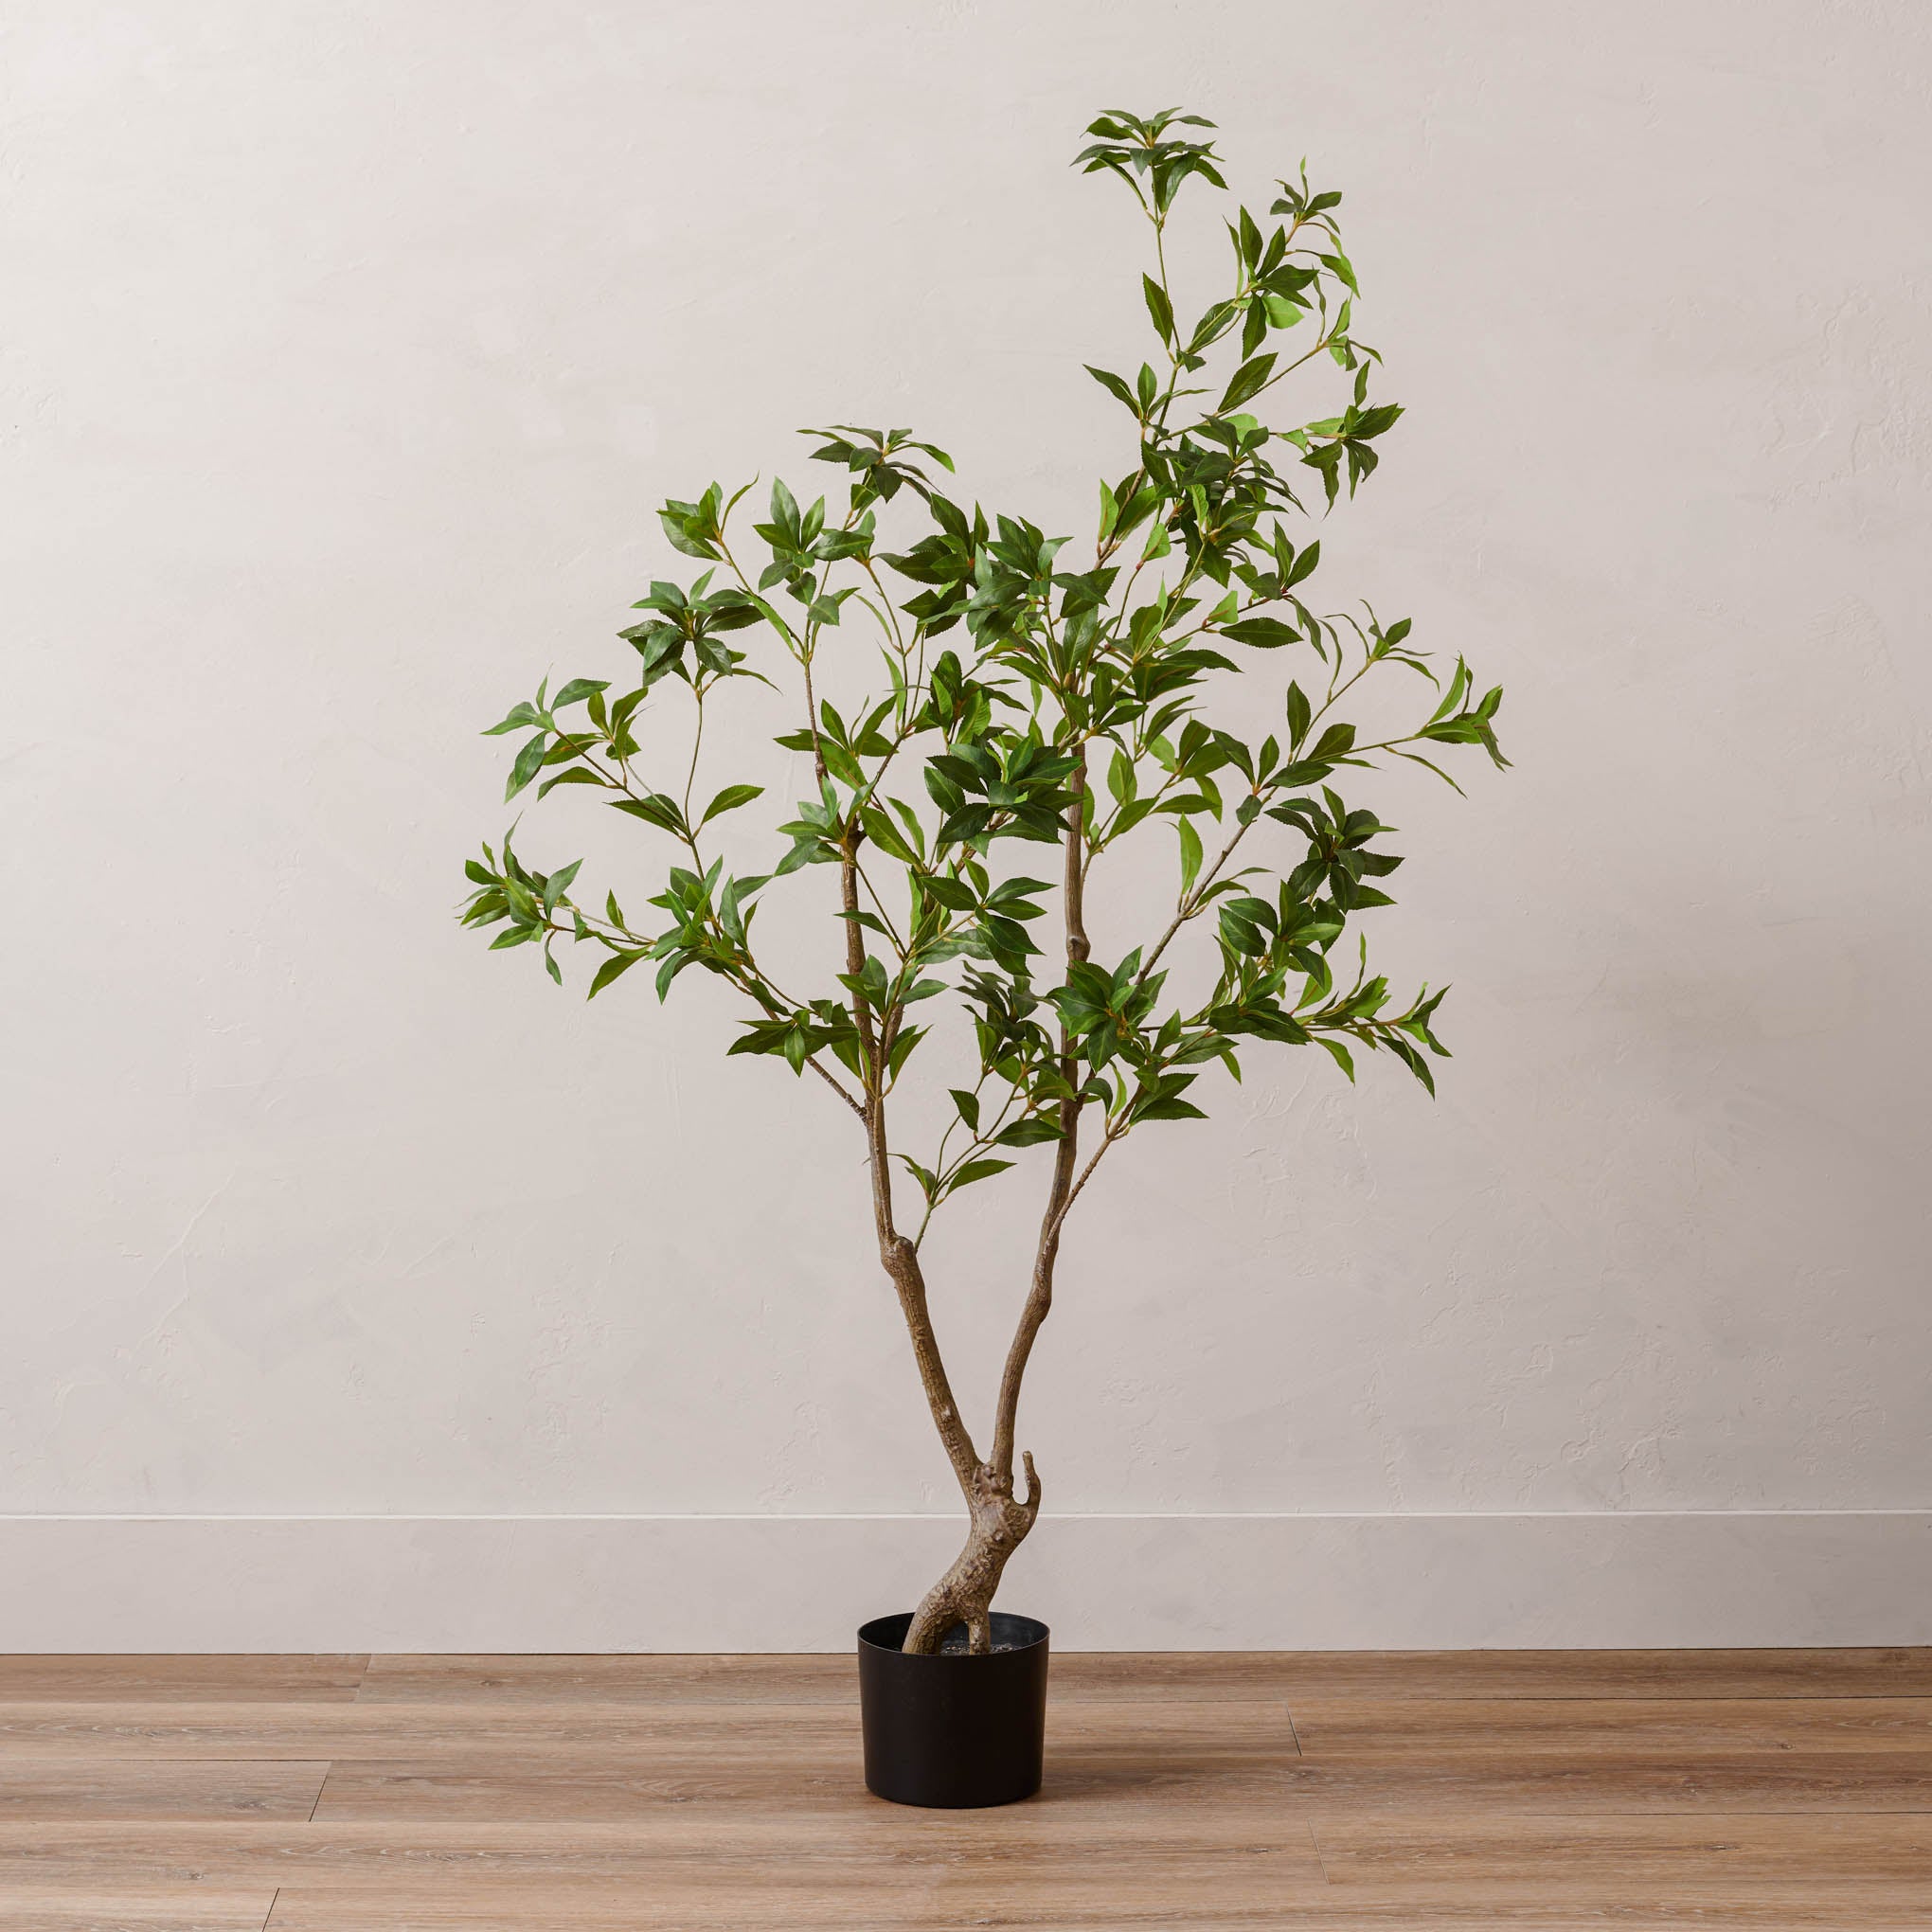 62" Pieris Japonica Tree in Plastic Pot